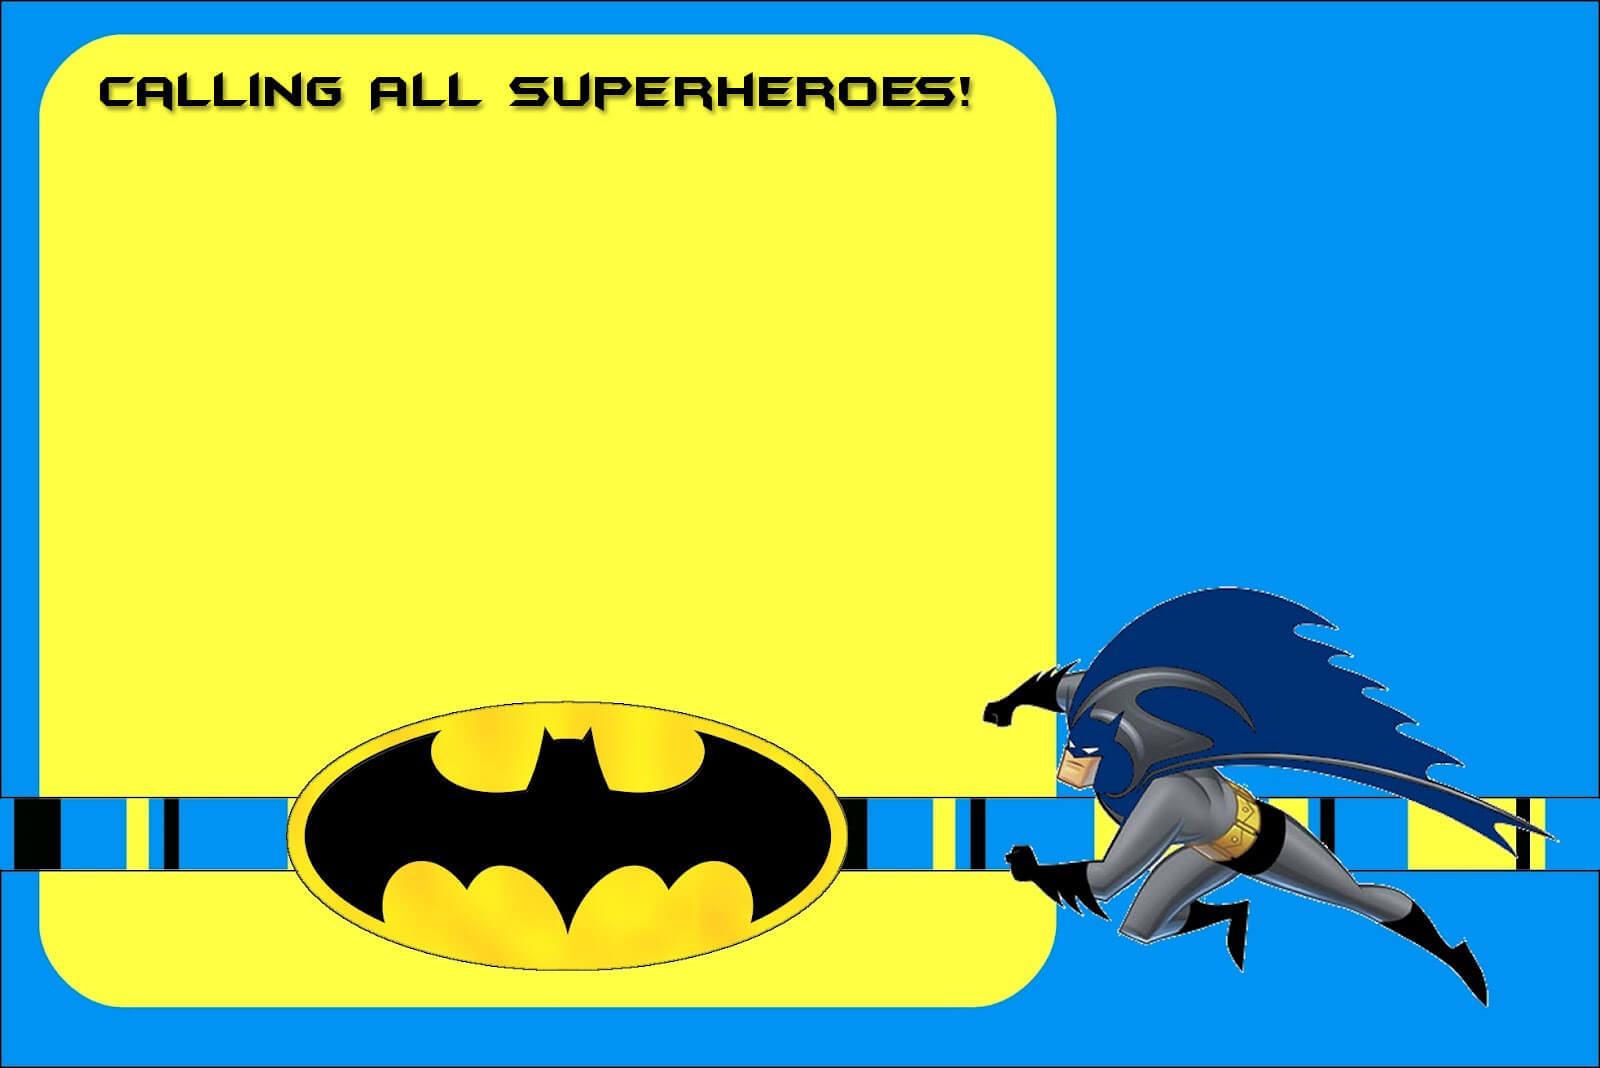 Free Printable Batman Forever Invitation Template | Drevio In Batman Birthday Card Template